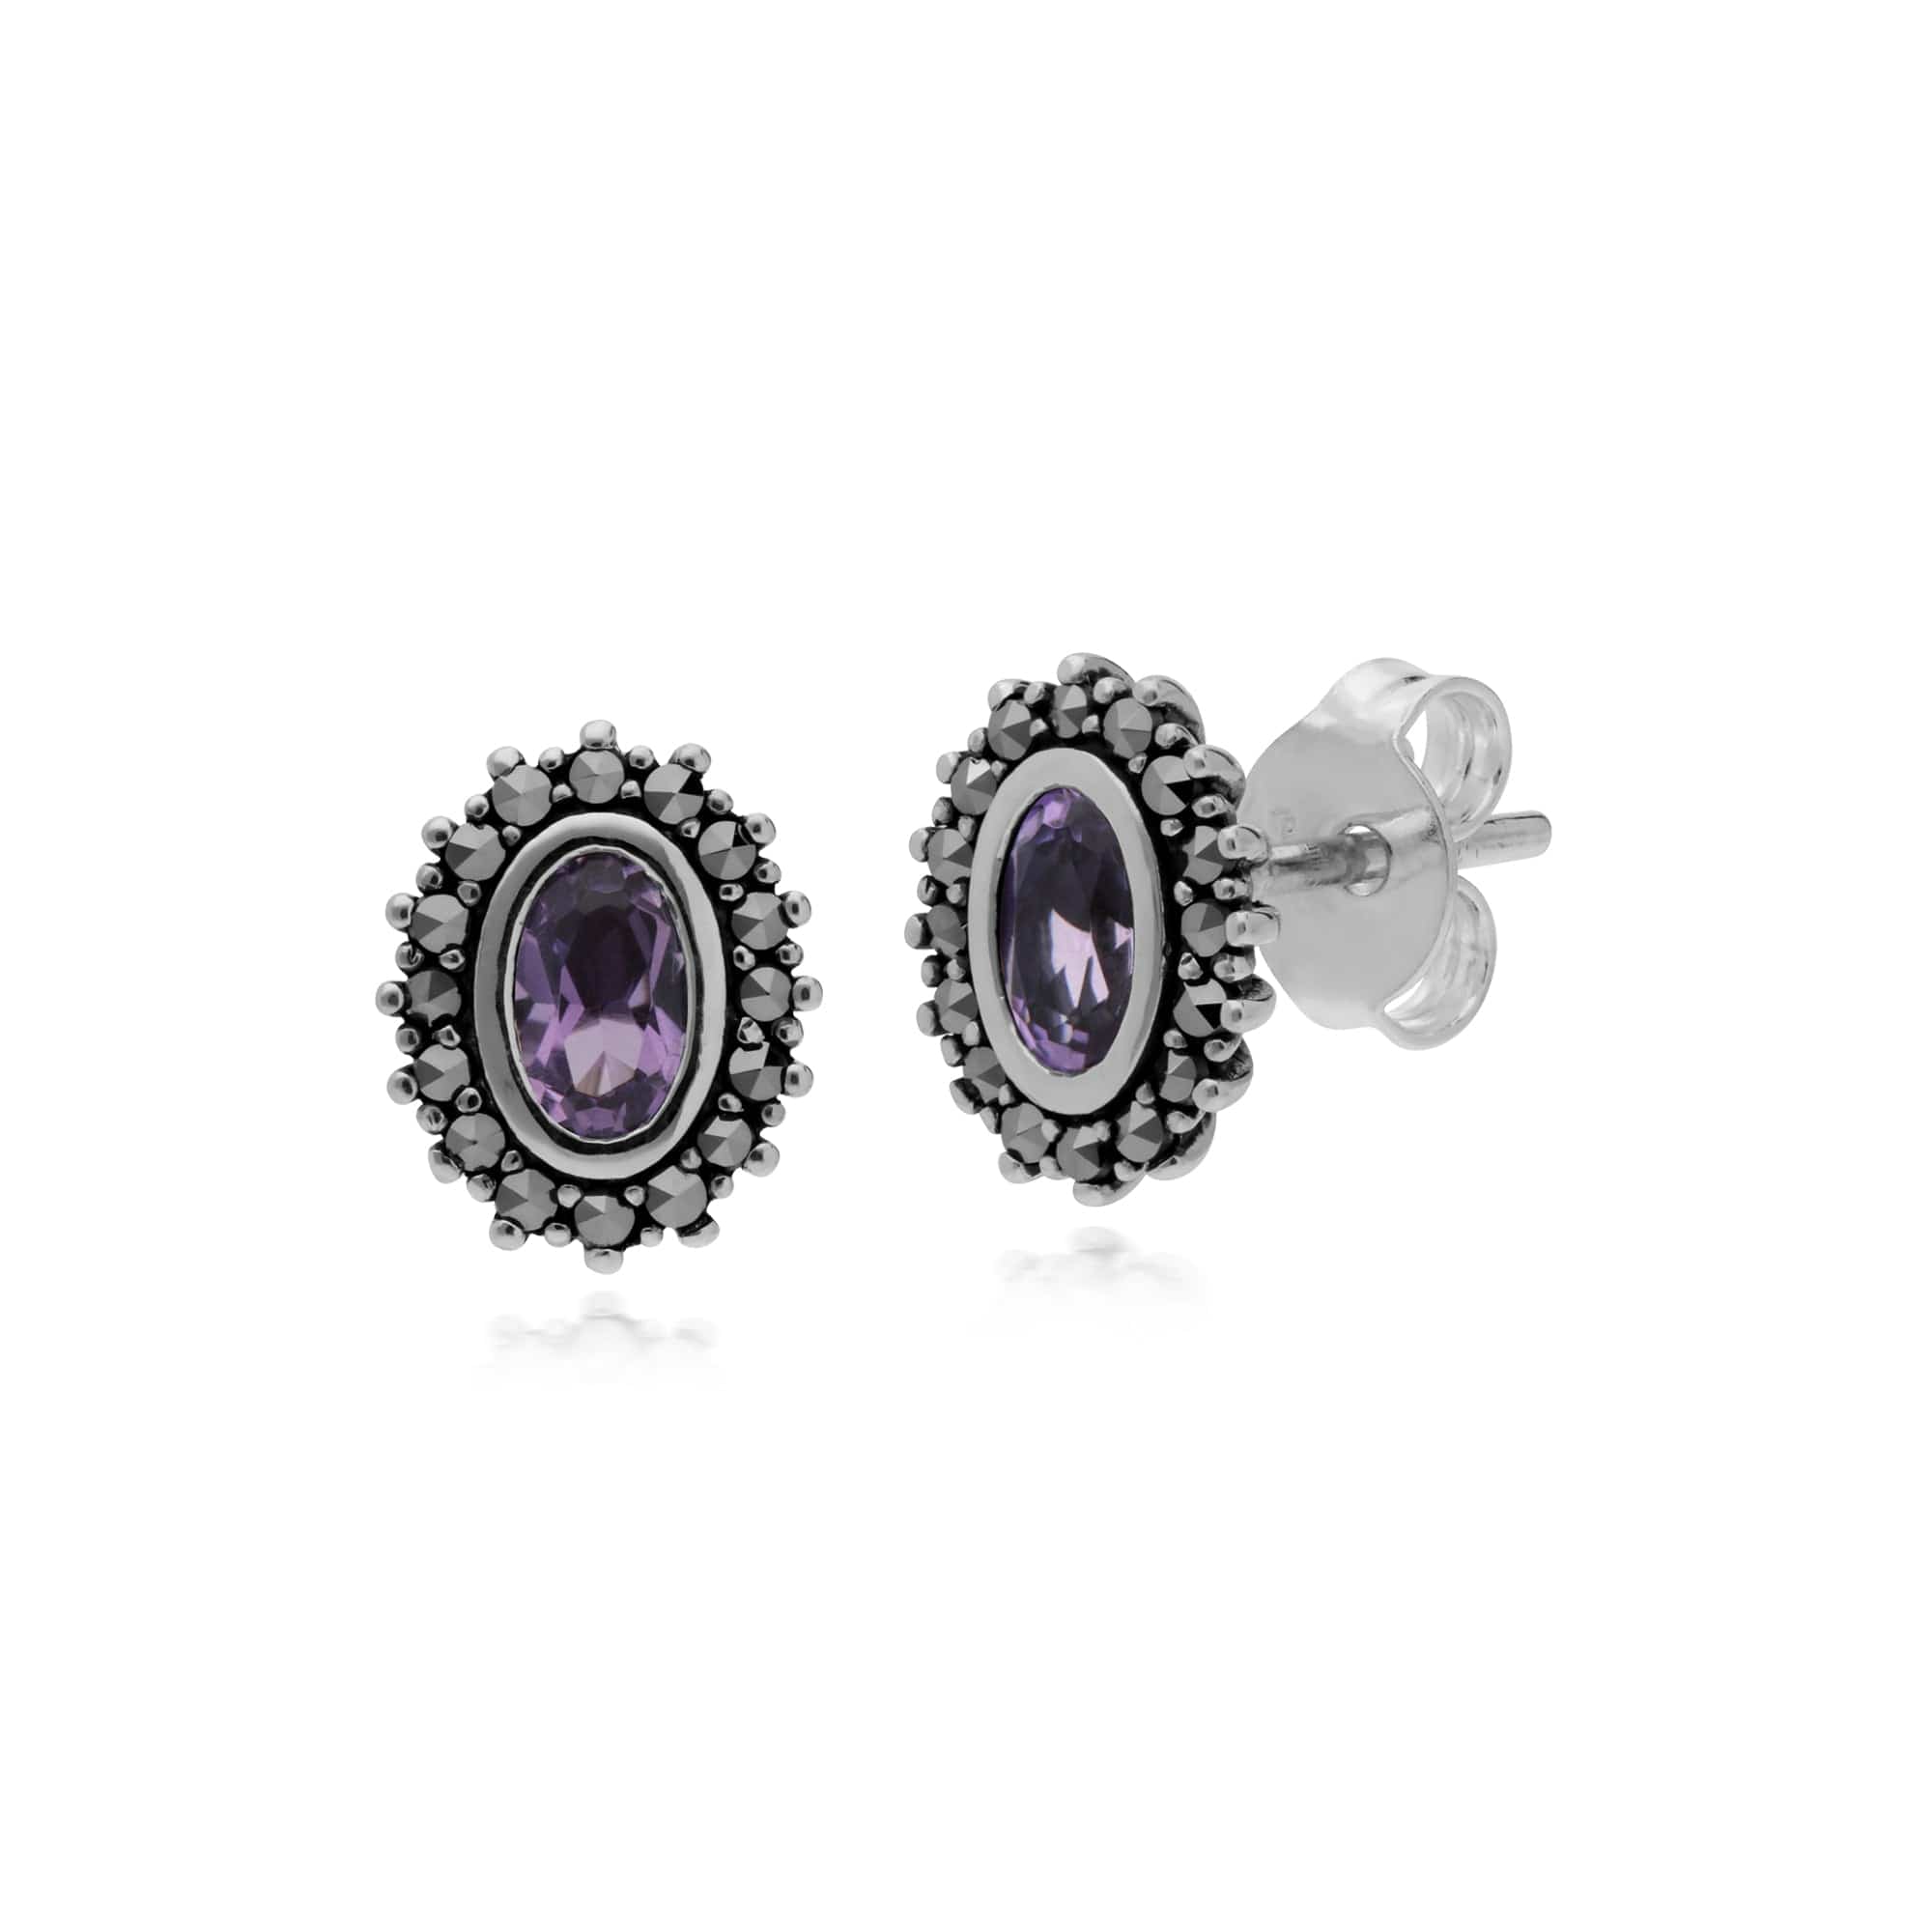 214E860902925-214R599702925 Art Deco Style Oval Amethyst & Marcasite Halo Stud Earrings & Ring Set in 925 Sterling Silver 2